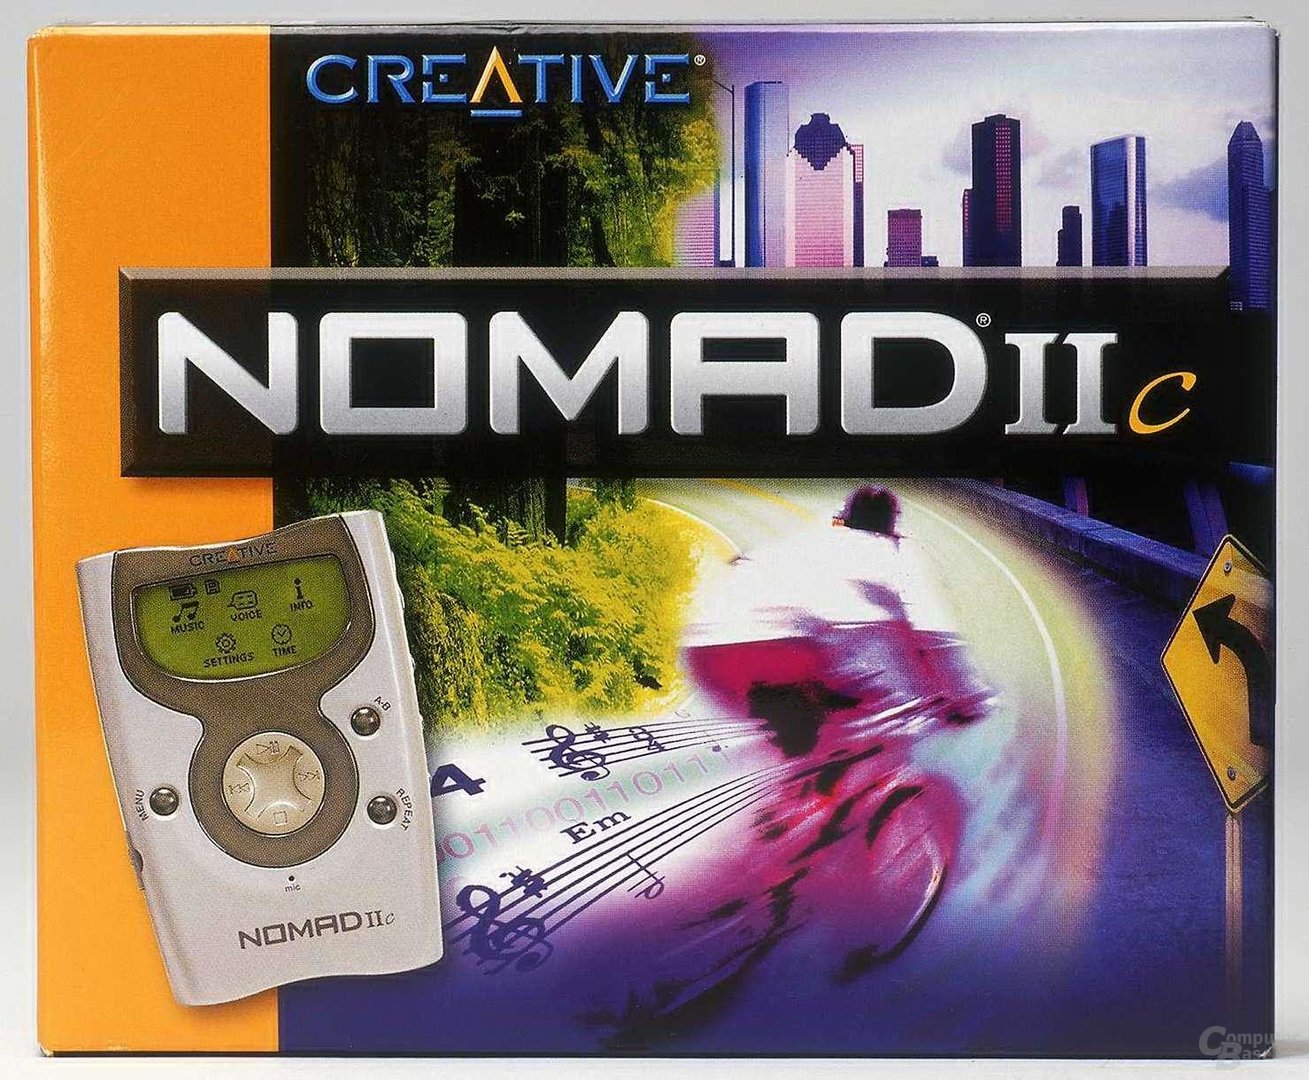 Creative DAP Nomad IIc